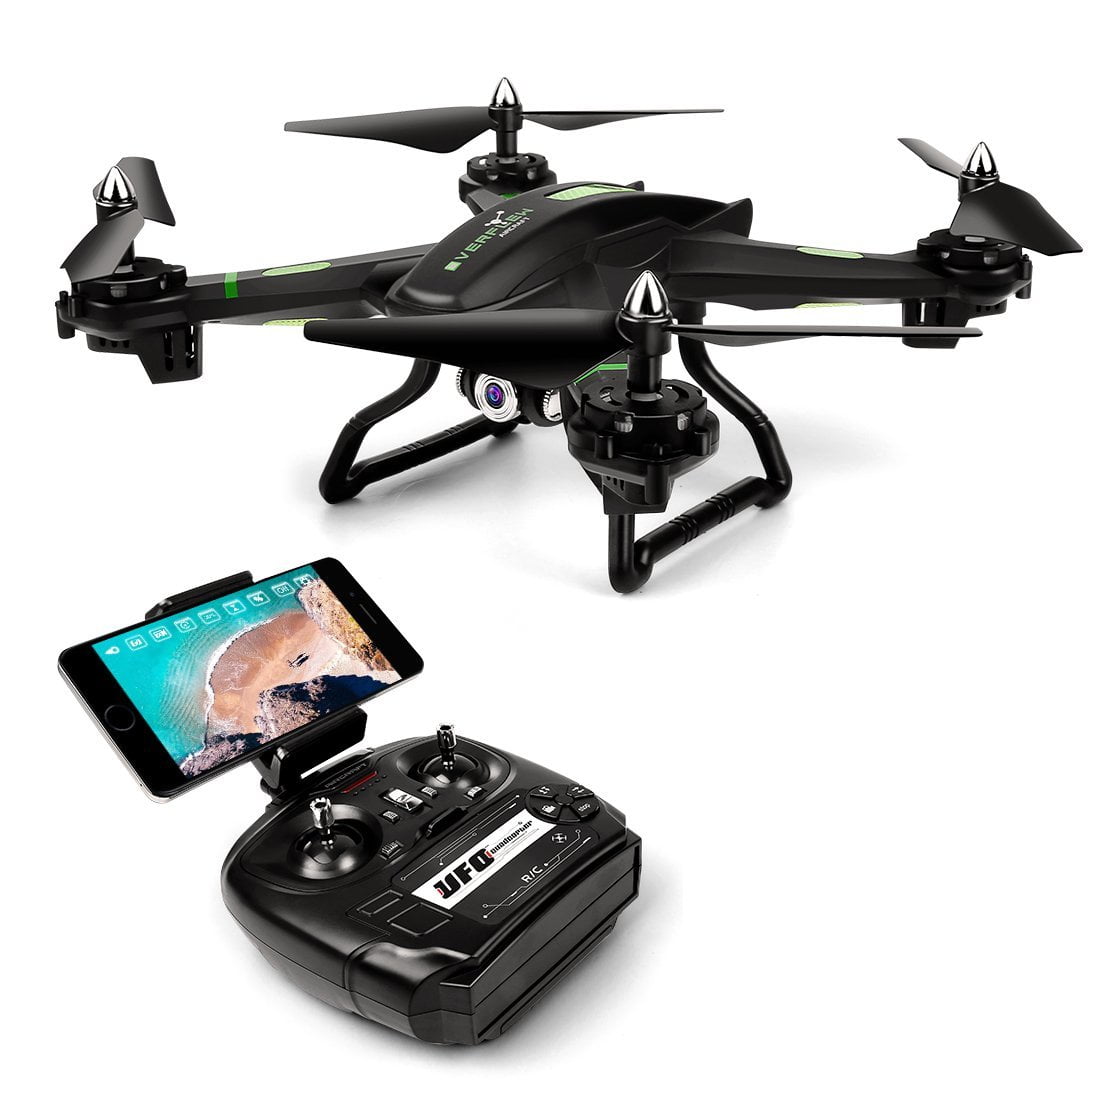 Lbla Fpv Drone With Wifi Camera Live Video Headless Mode 24ghz 4 Ch 6